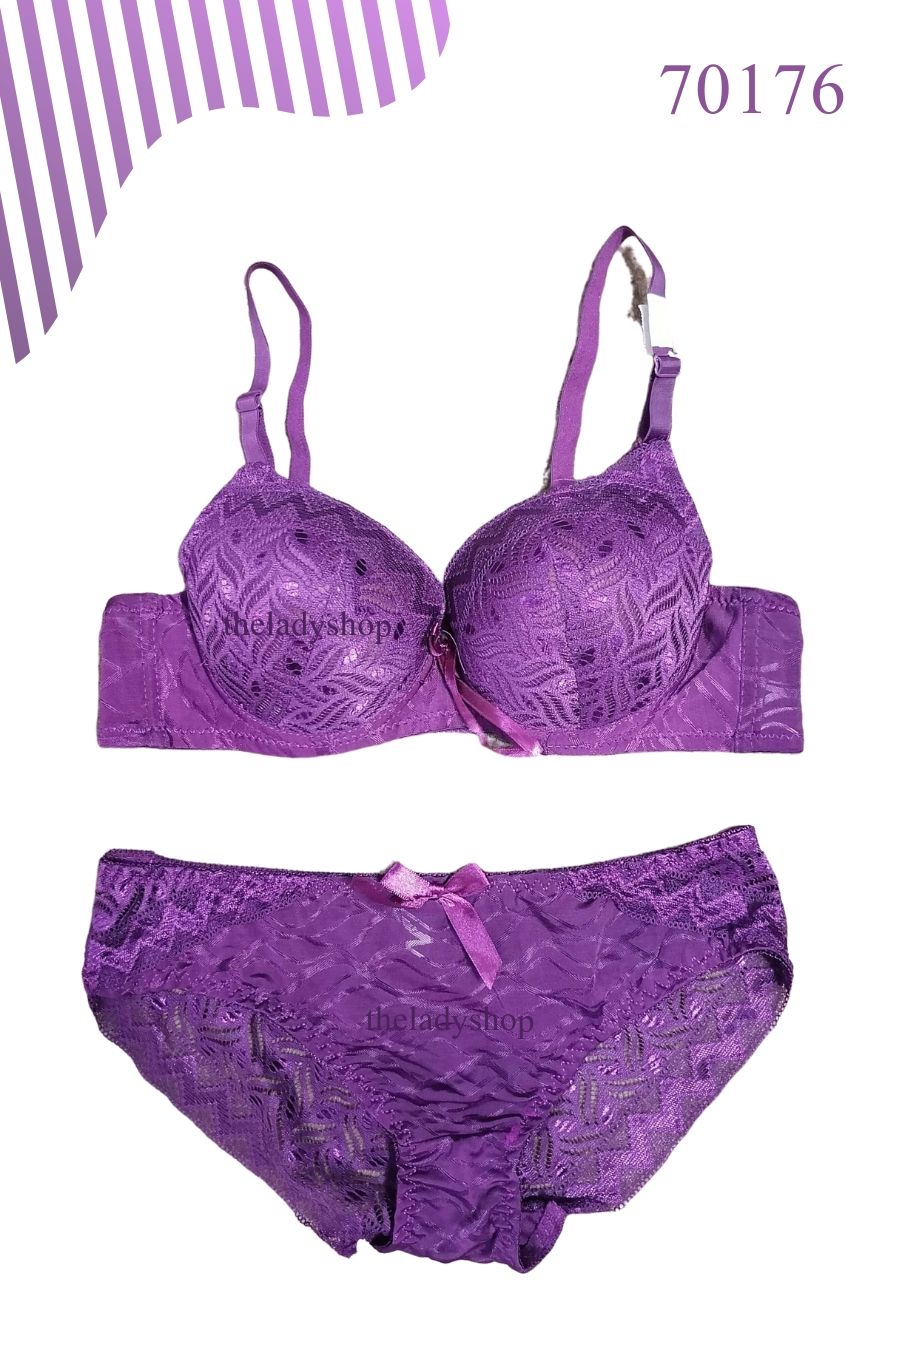 2pc fancy lace bra & panty set - Purple - The Lady Shop